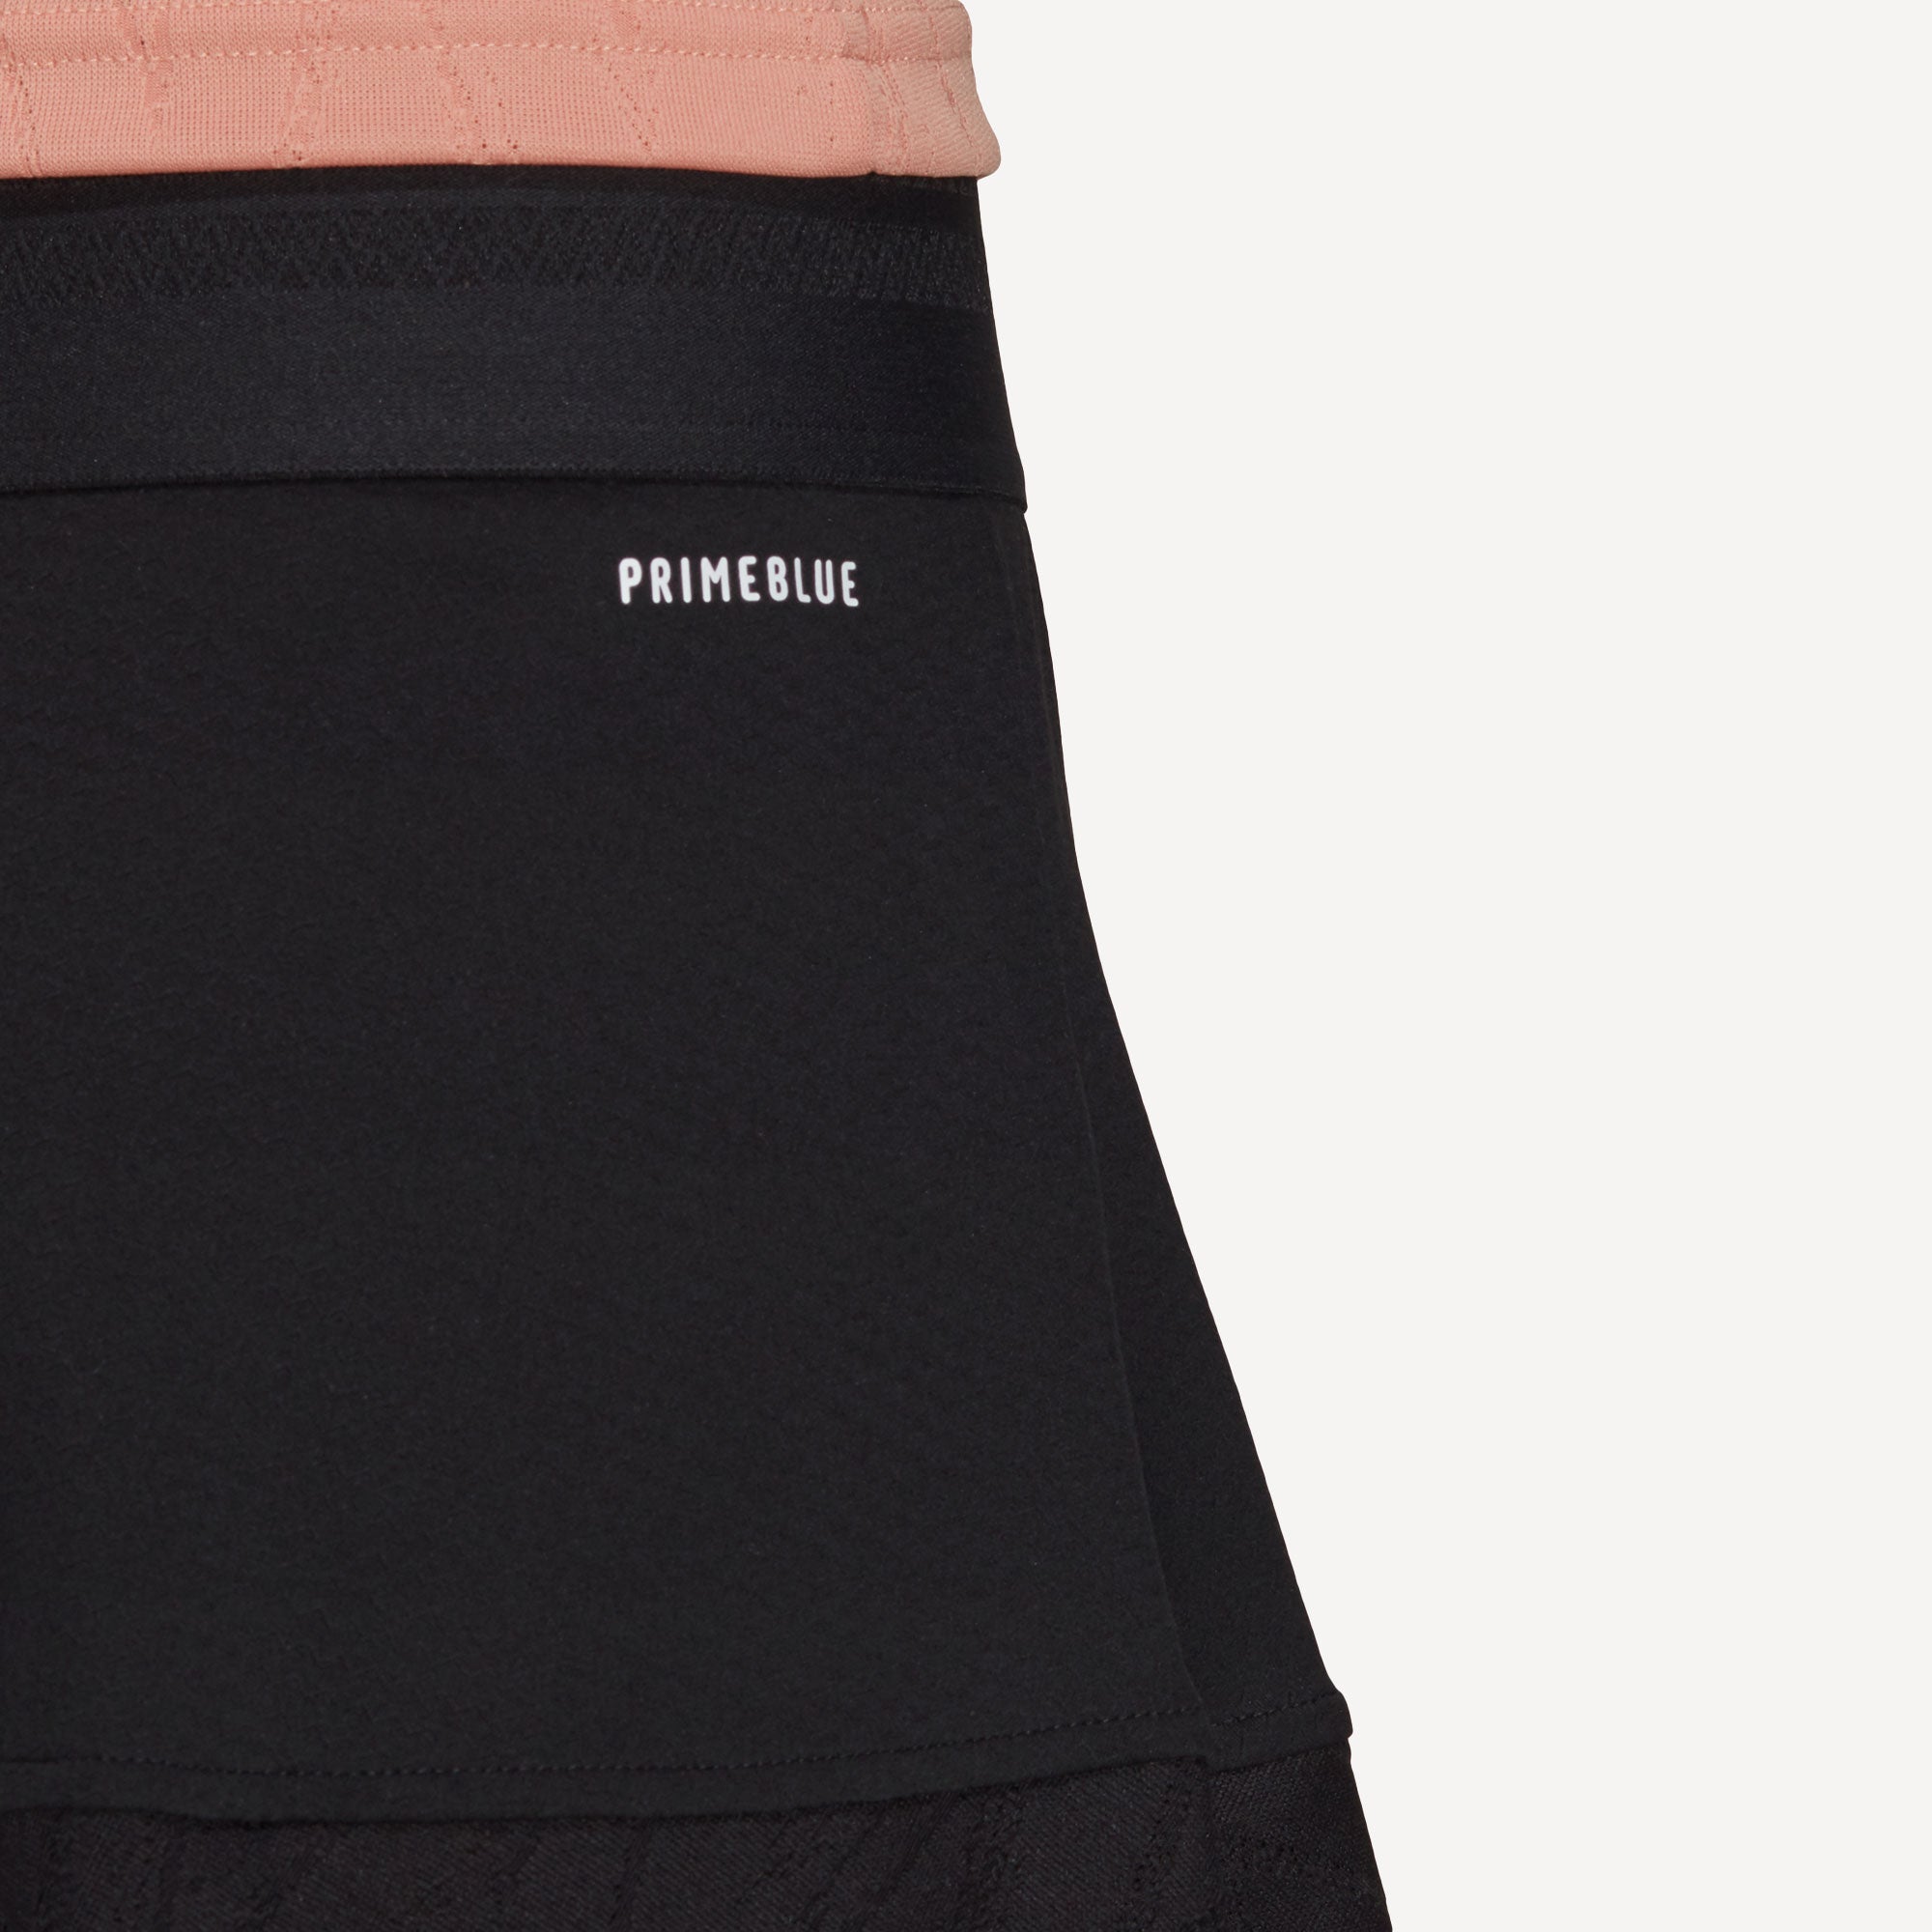 adidas Match Primeblue Women's Tennis Skirt Black (4)